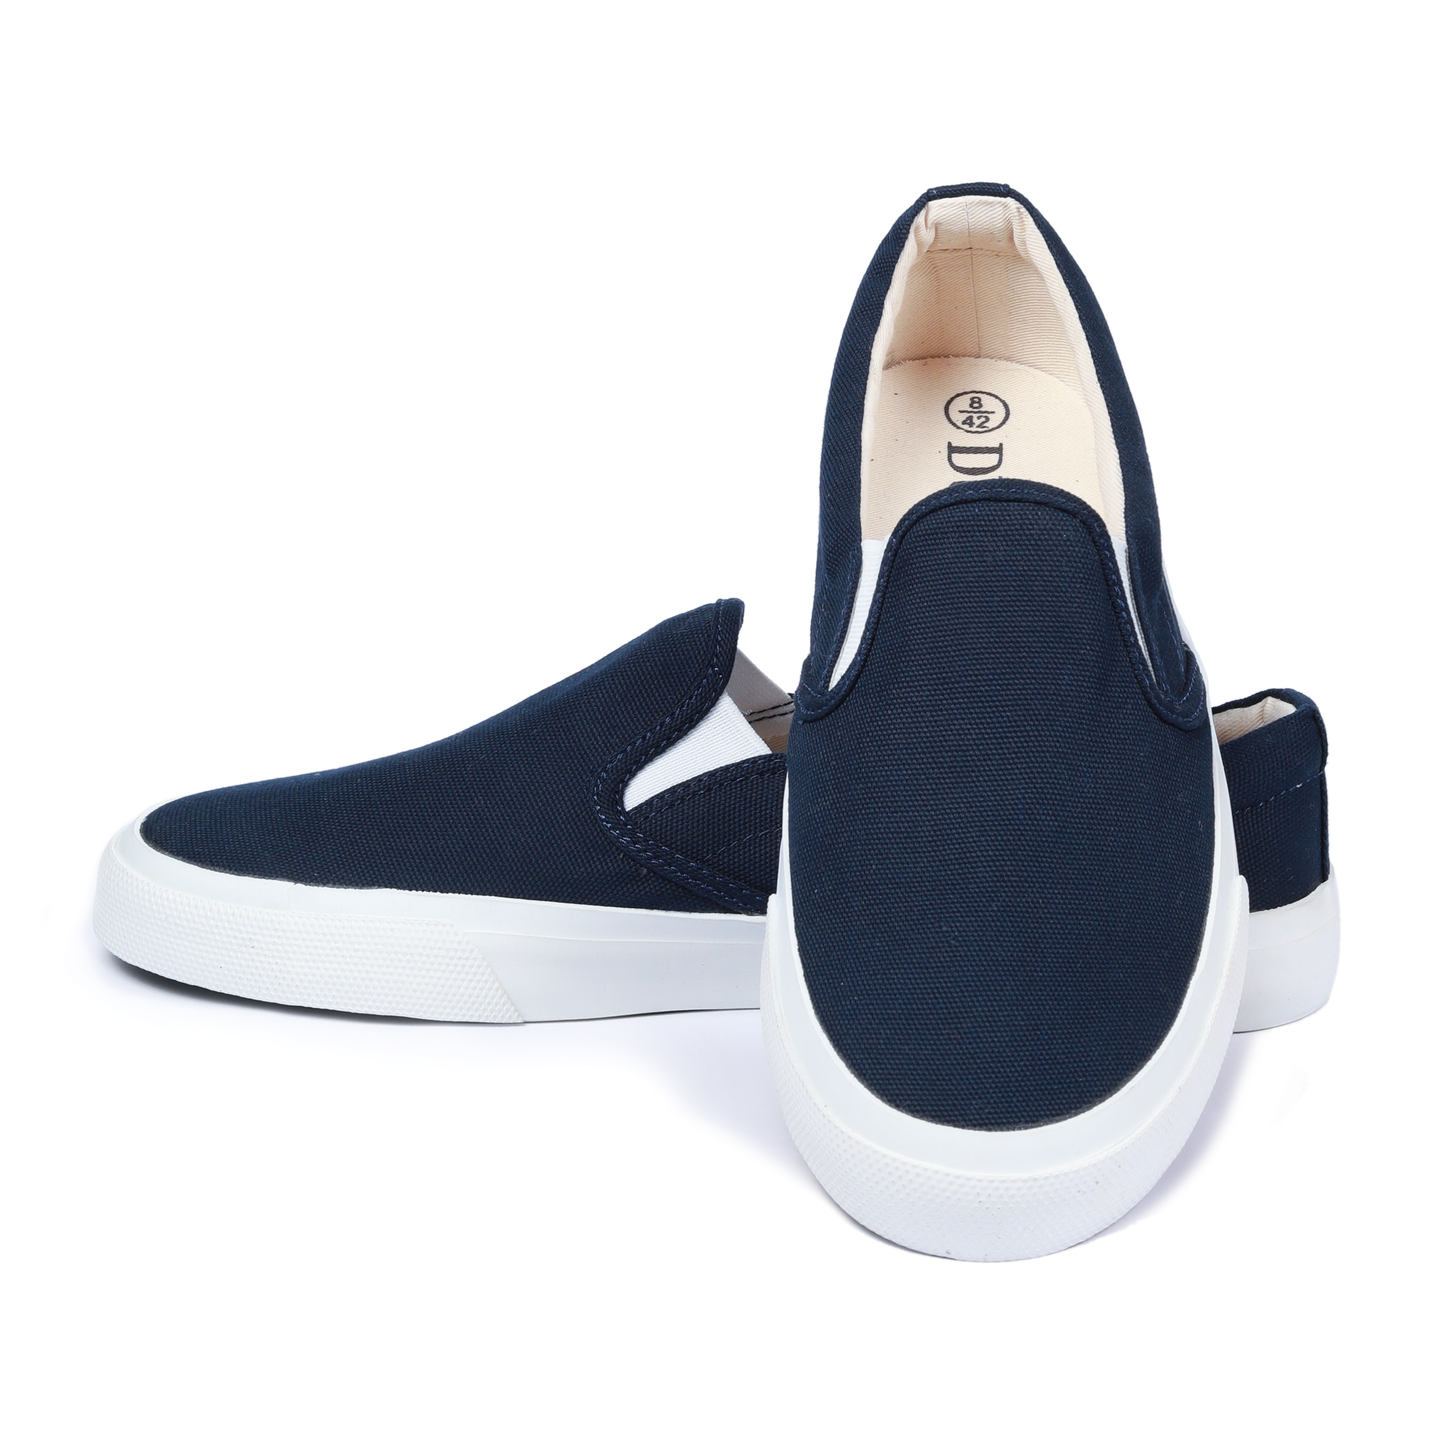 Shop Duvita's Navy Blue Shoes Collection – duvita.co